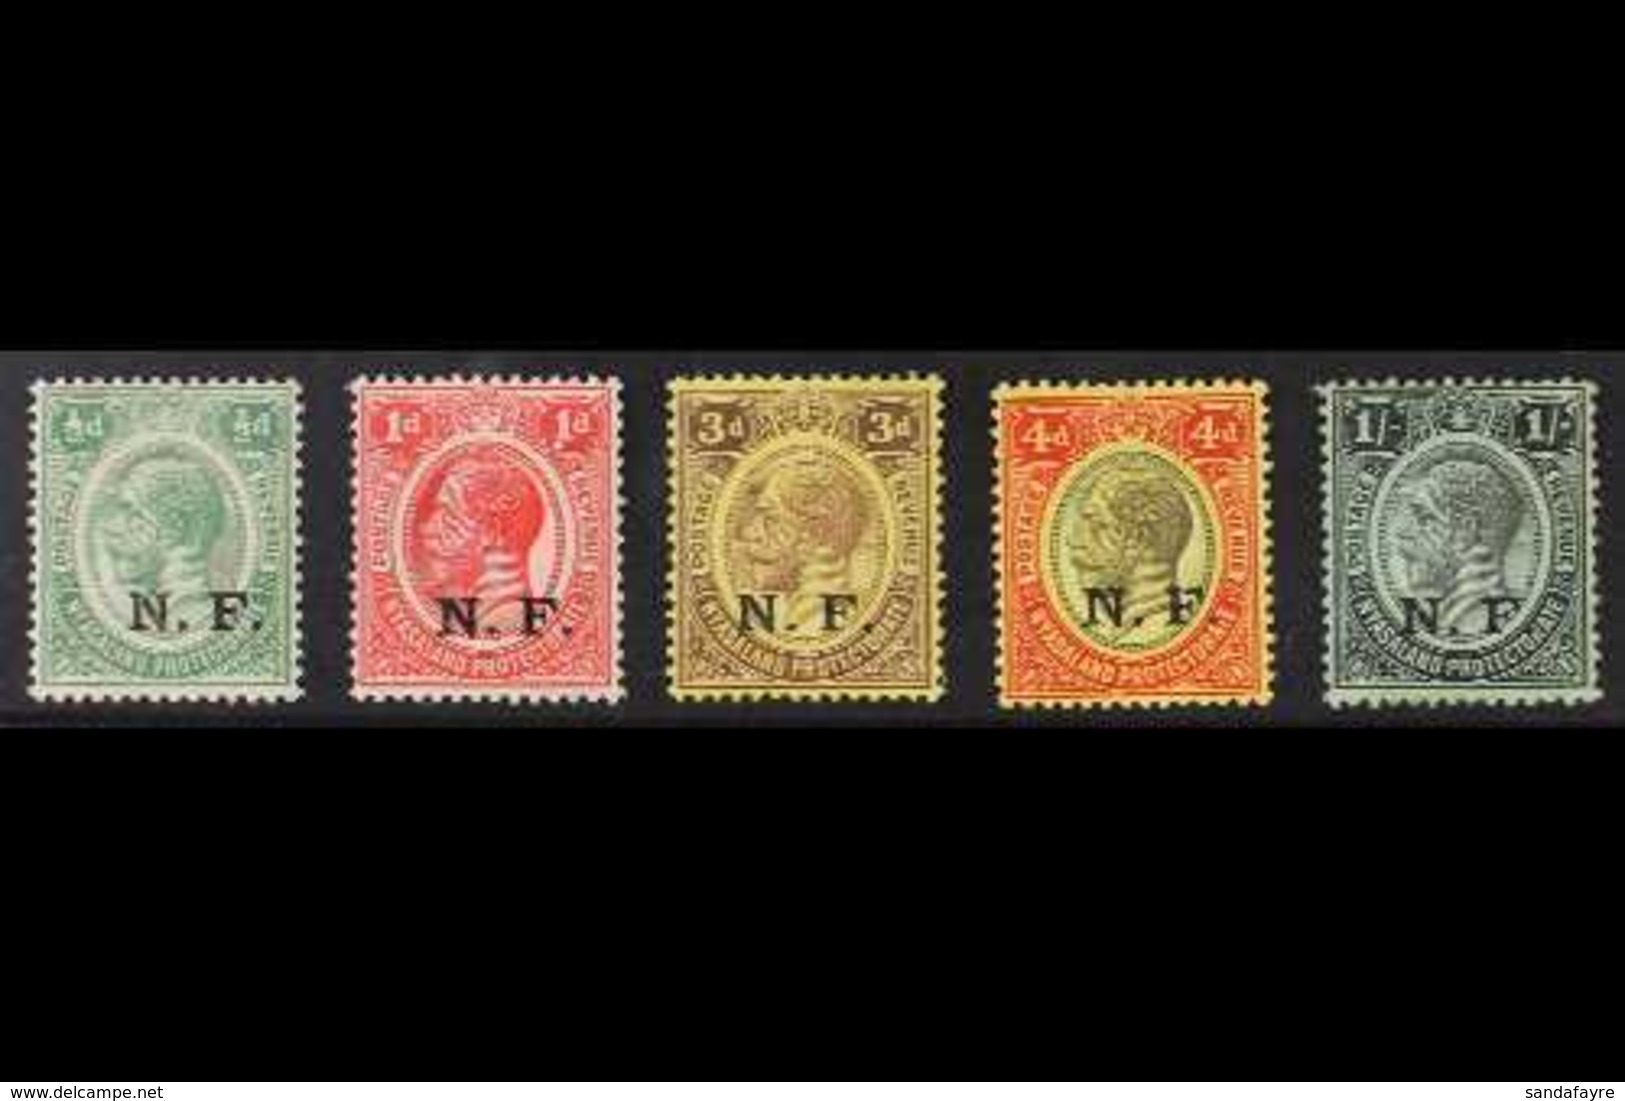 NYASALAND-RHODESIA FORCE 1916 "N.F." Overprints On Nyasaland Complete Set, SG N1/N5, Fine Mint. (5 Stamps) For More Imag - Tanganyika (...-1932)